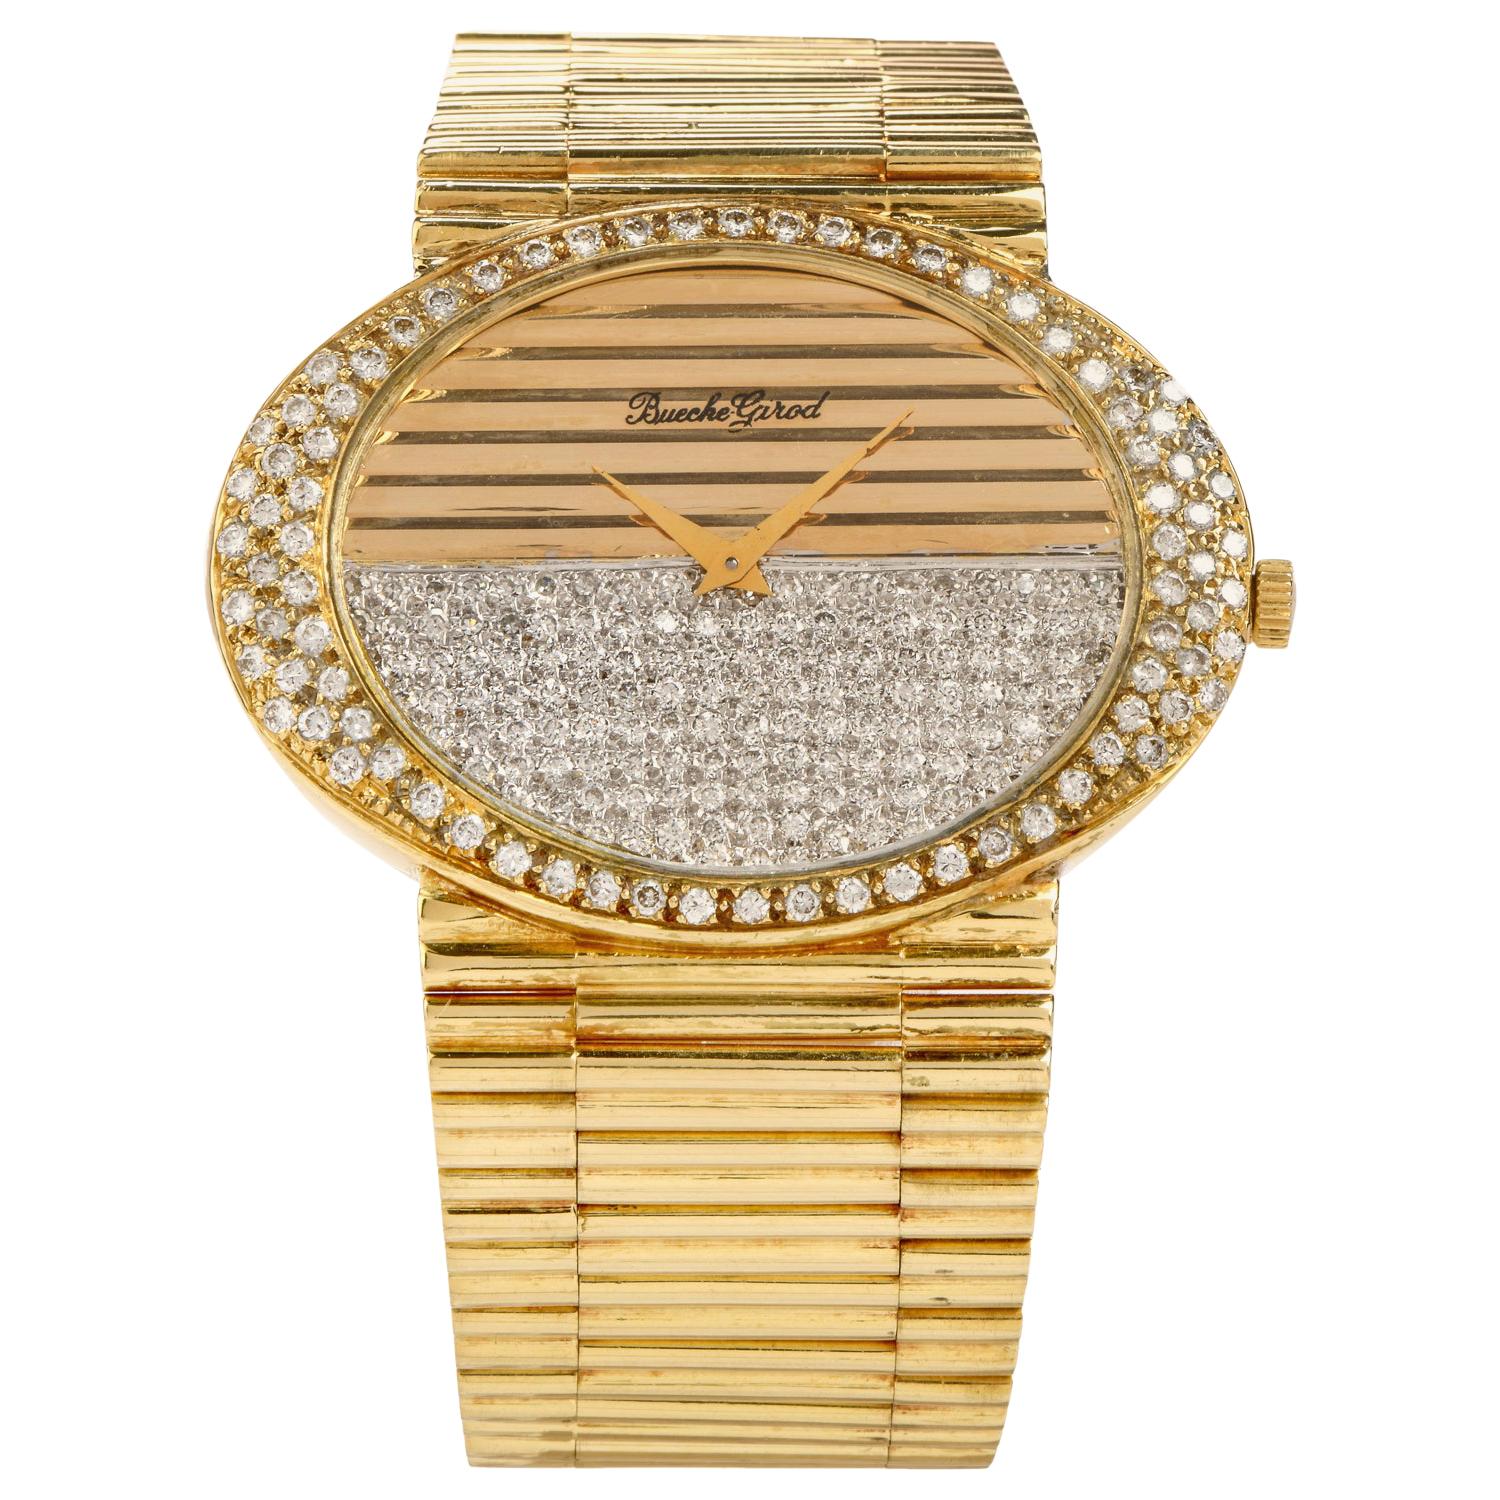 1970s Bueche Girod Diamond 18 Karat Gold Ref YG1200 Mechanical Watch